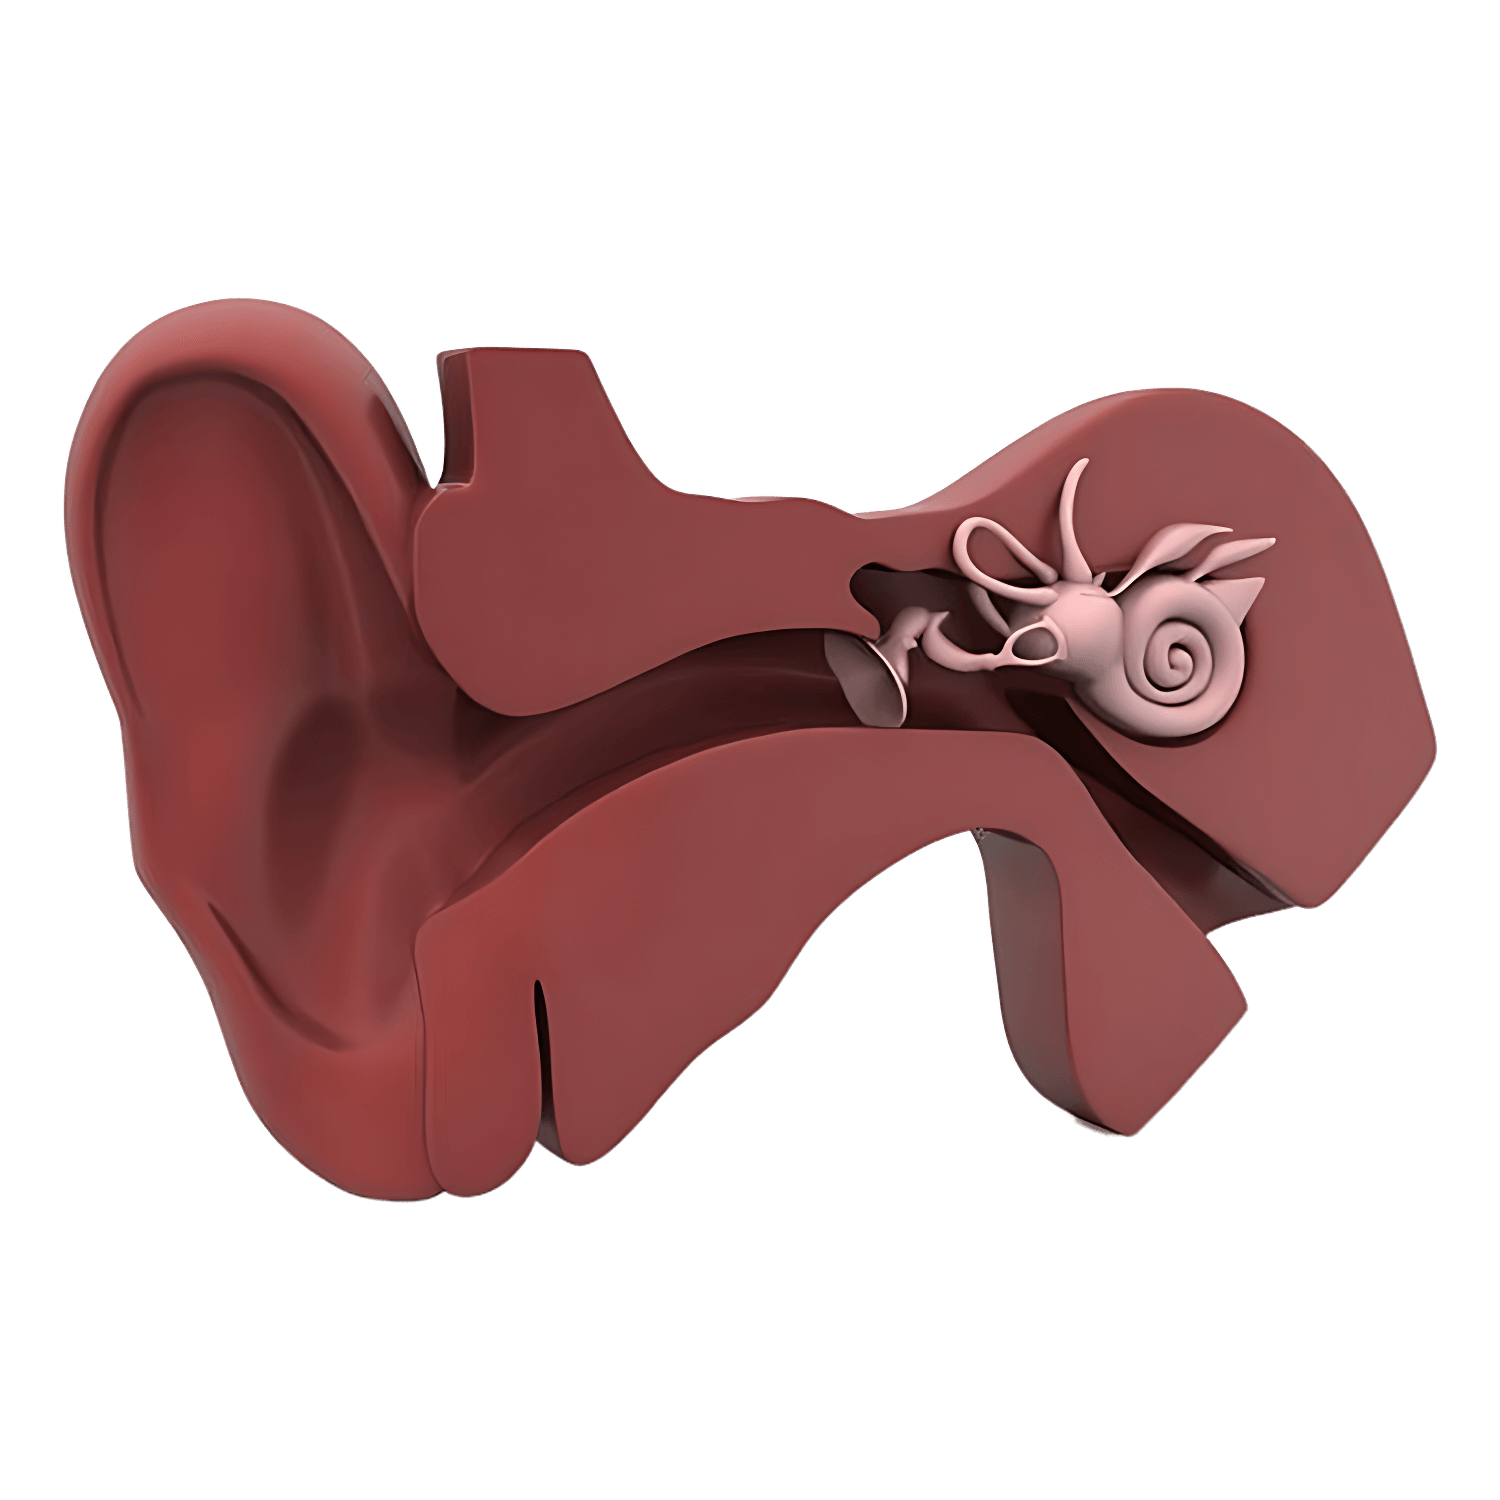 Ear Anatomy Transparent Image